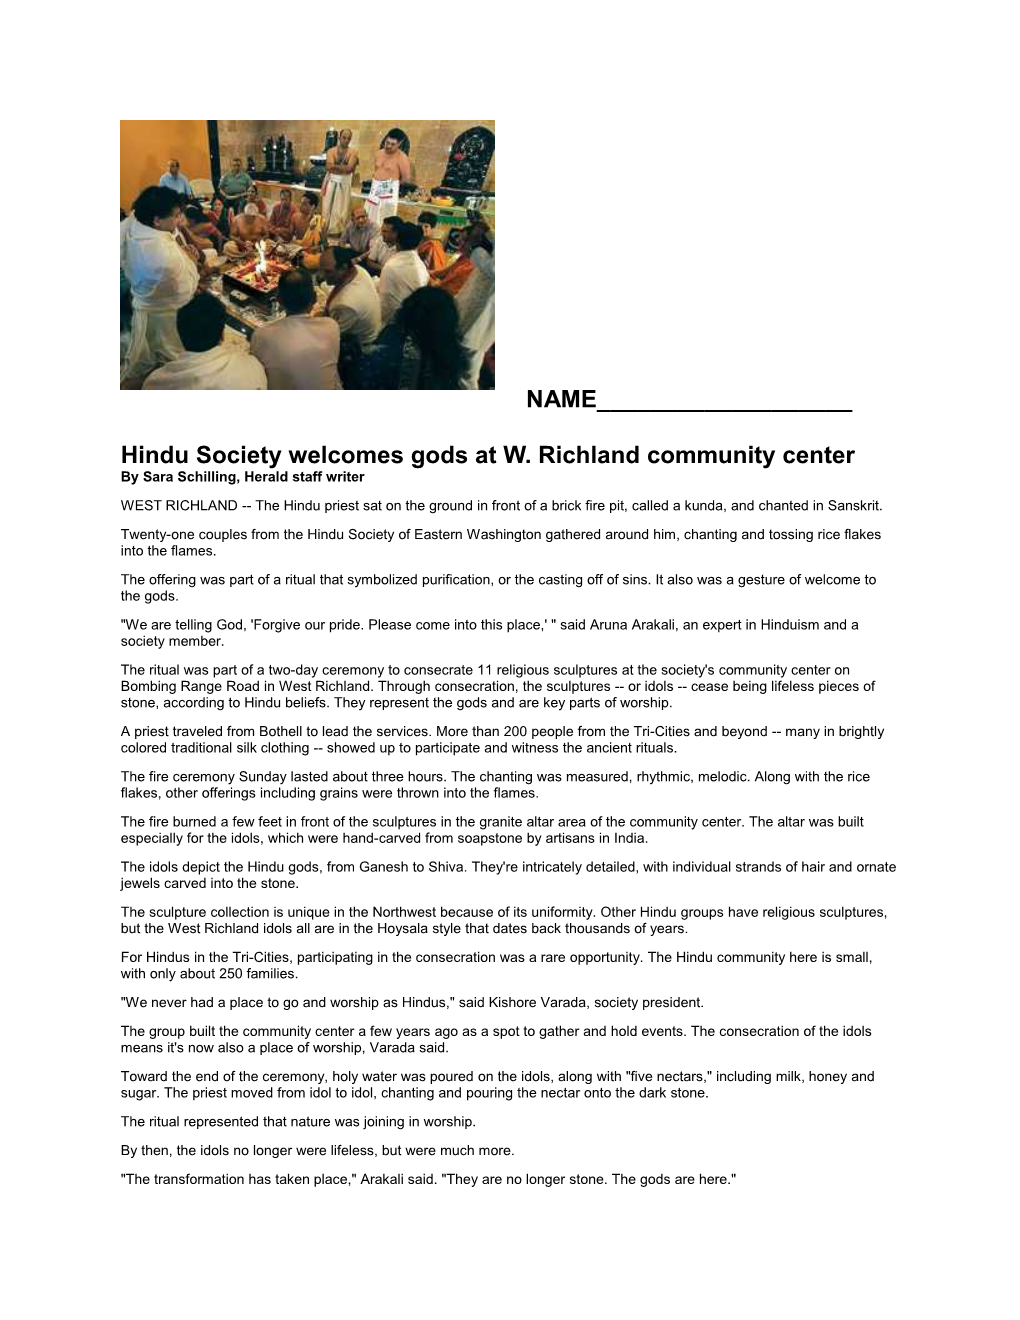 Hindu Society Welcomes Gods at W. Richland Community Center